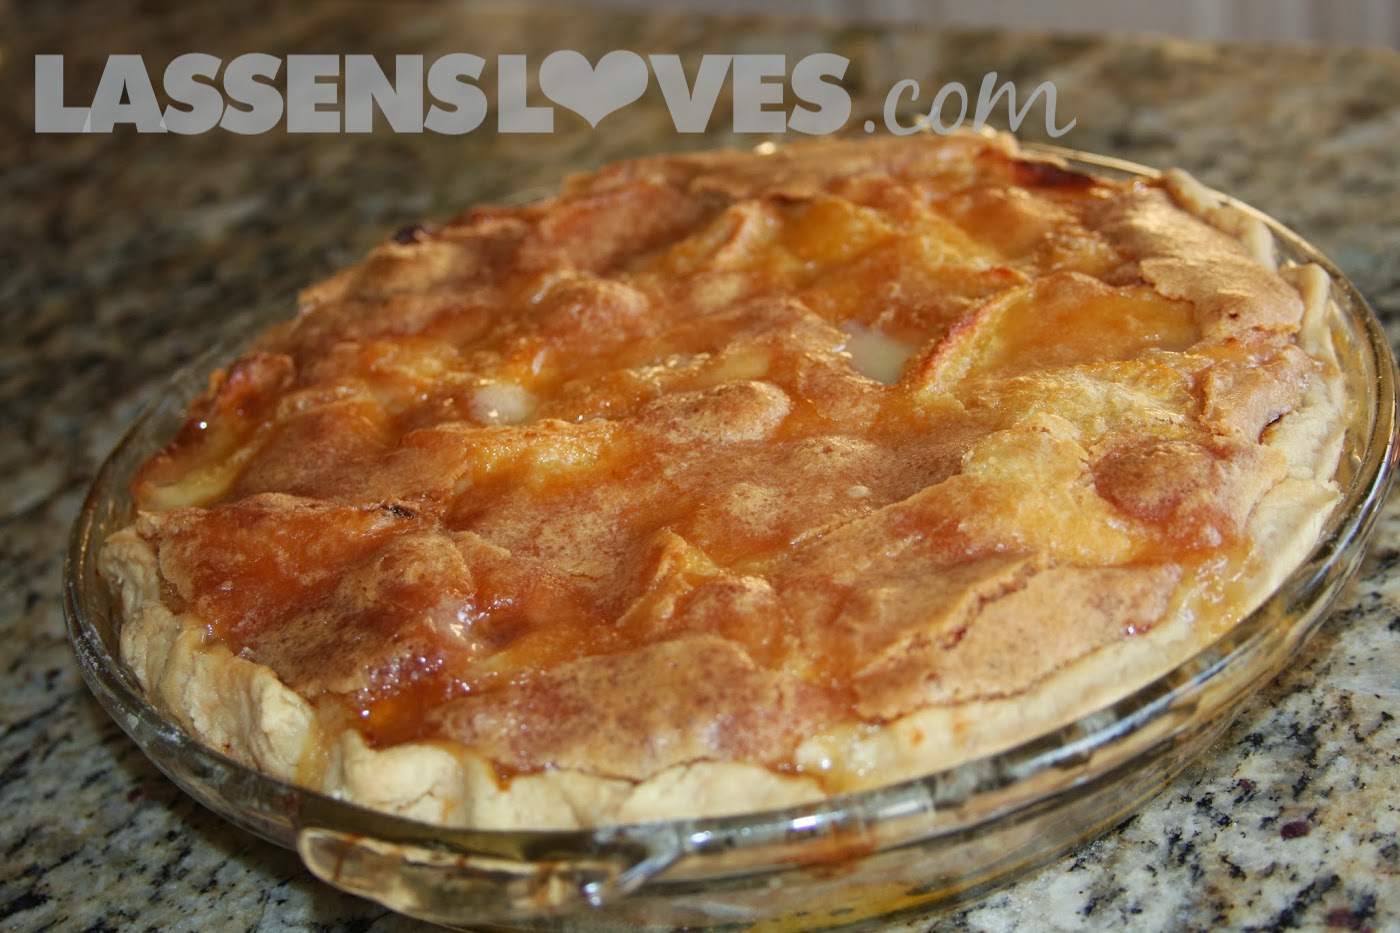 lassensloves.com, Lassen's, Lassens, Peach+Pie+Recipe, Pie+Crust+Recipe,Peach+Pie, Pie+Crust